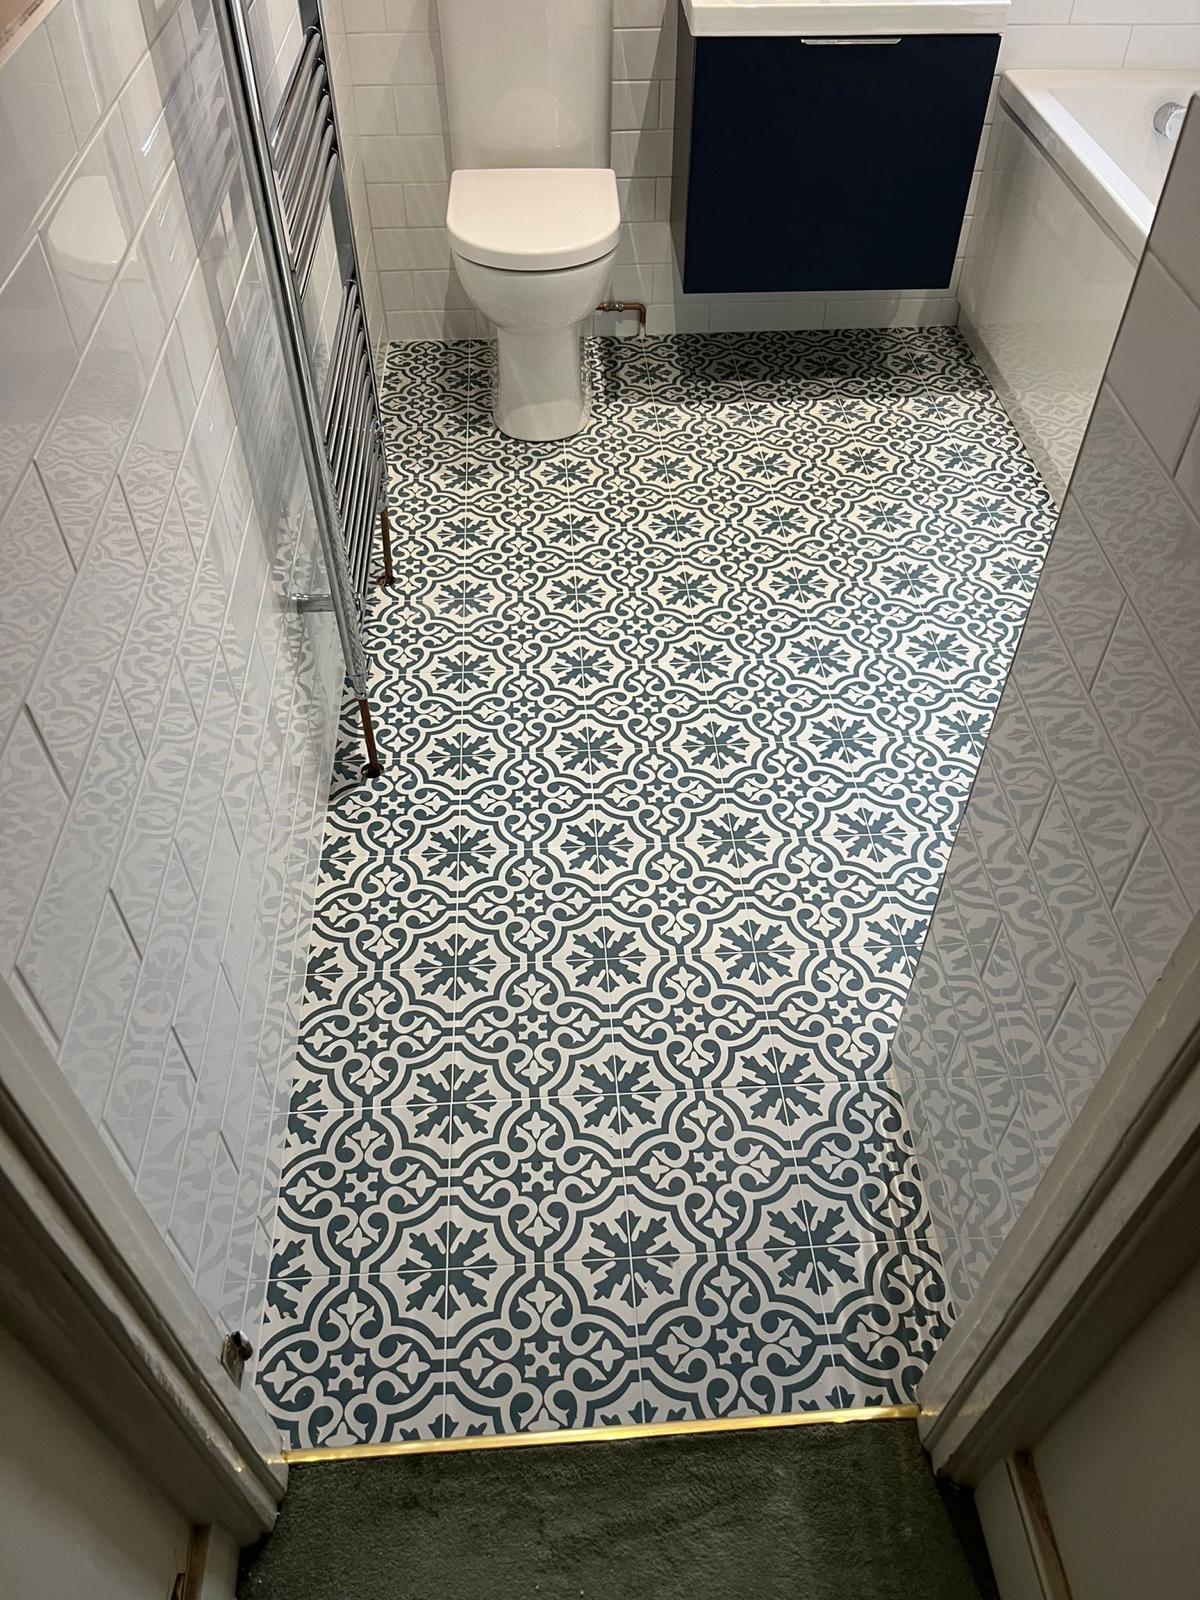 tiled bathroom suite beckenham